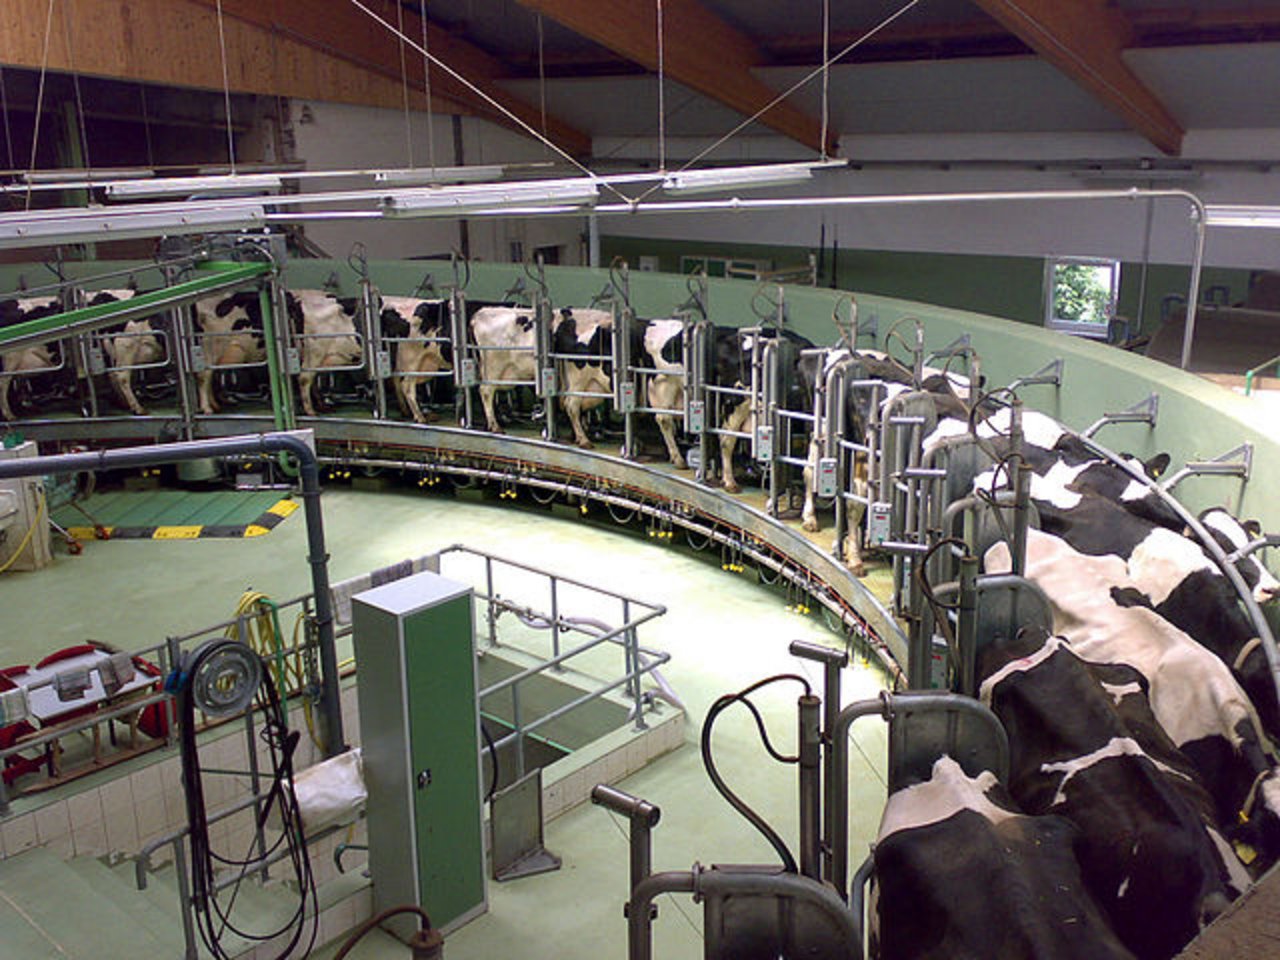 Milchkühe im Melk-Karussell. (Symbolbild Wikimedia)